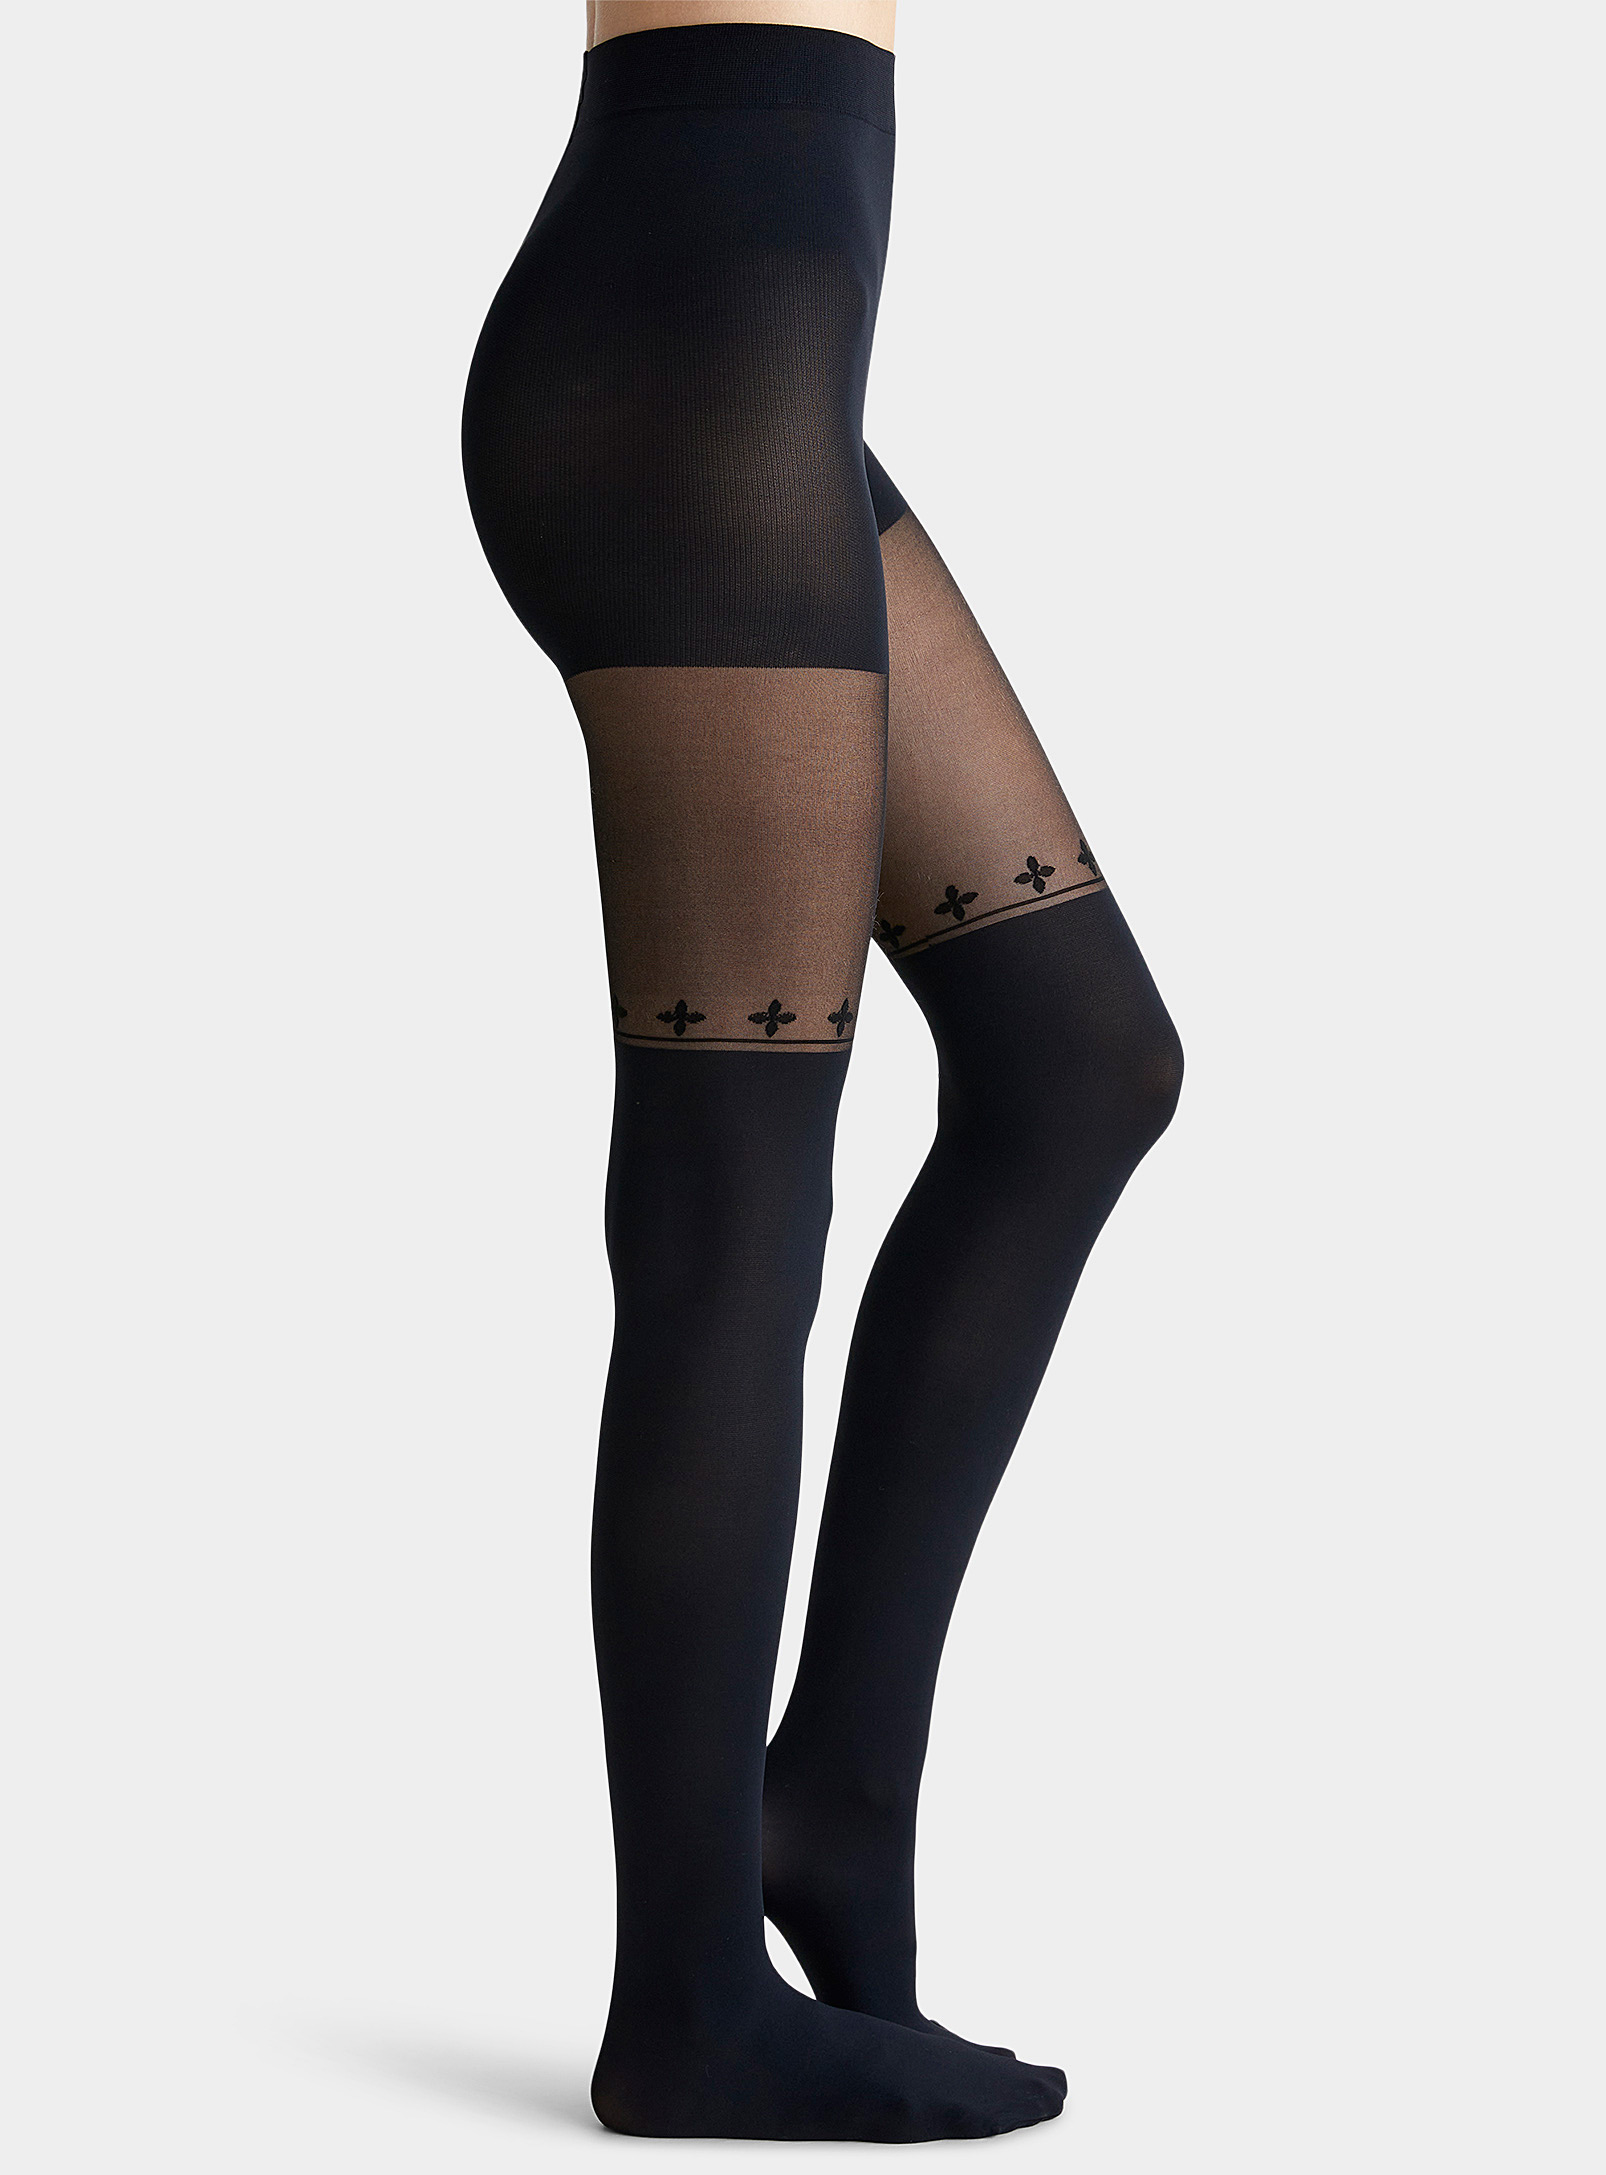 Rachel - Women's Minimalist flower thigh-high style pantyhose